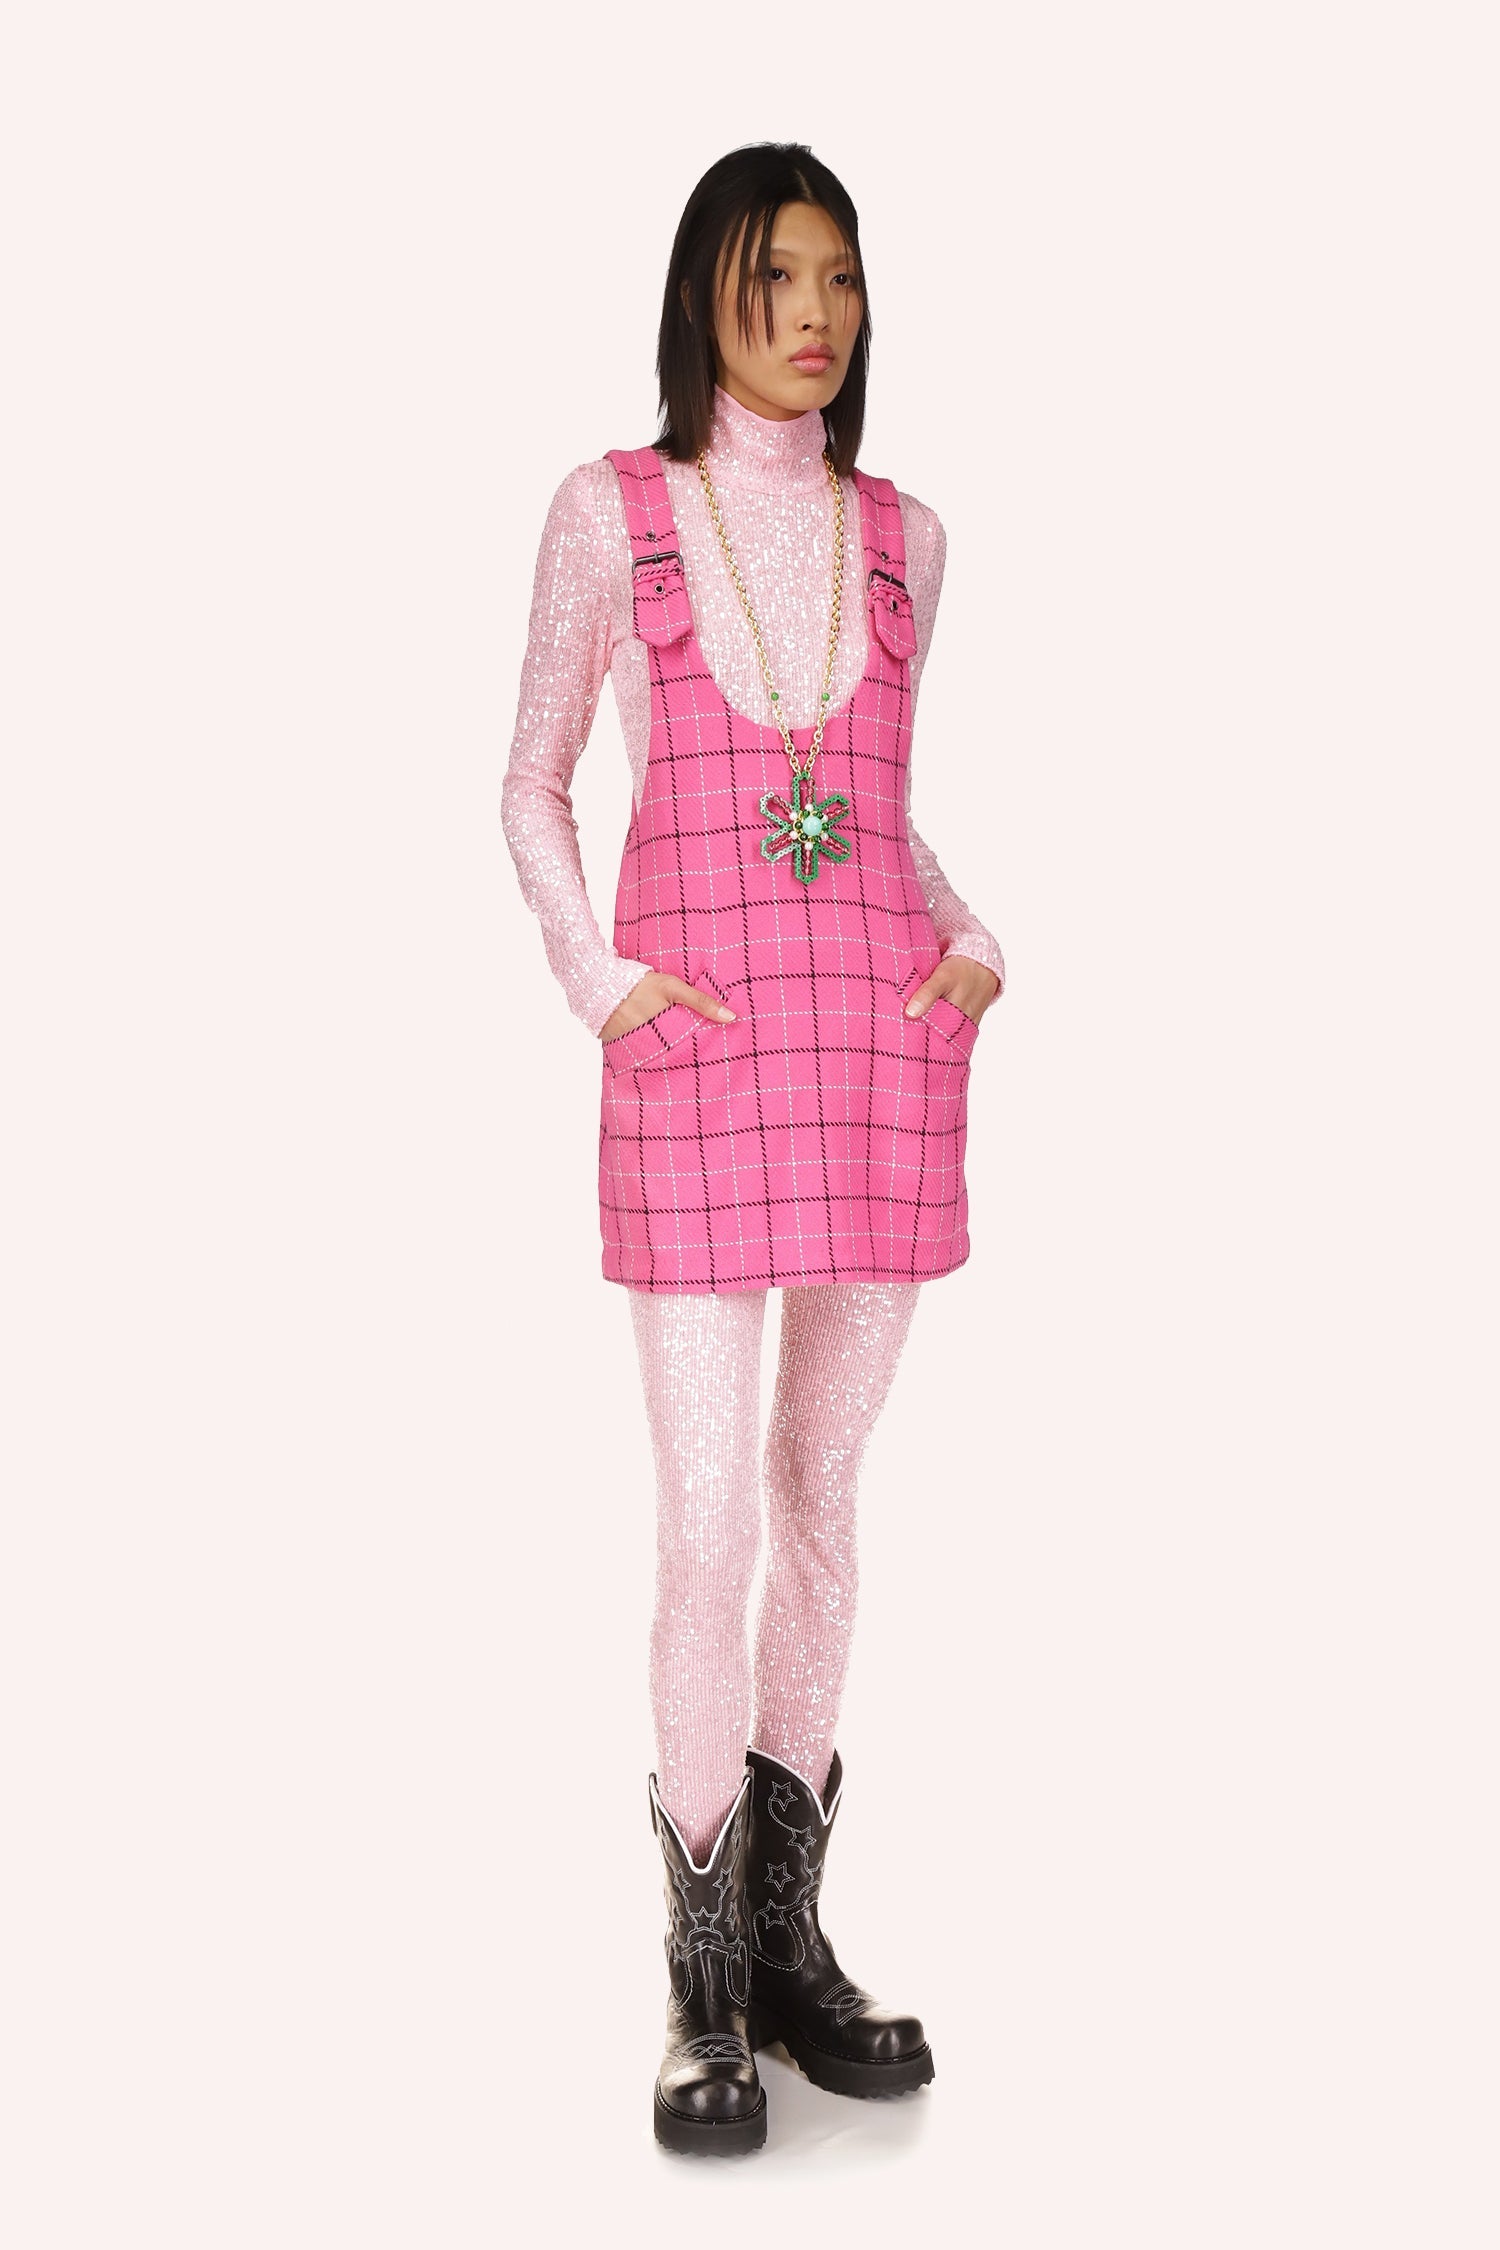 Sleeveless mini dress, deep cut collar, black/white squares pattern on pink, large buckles straps 